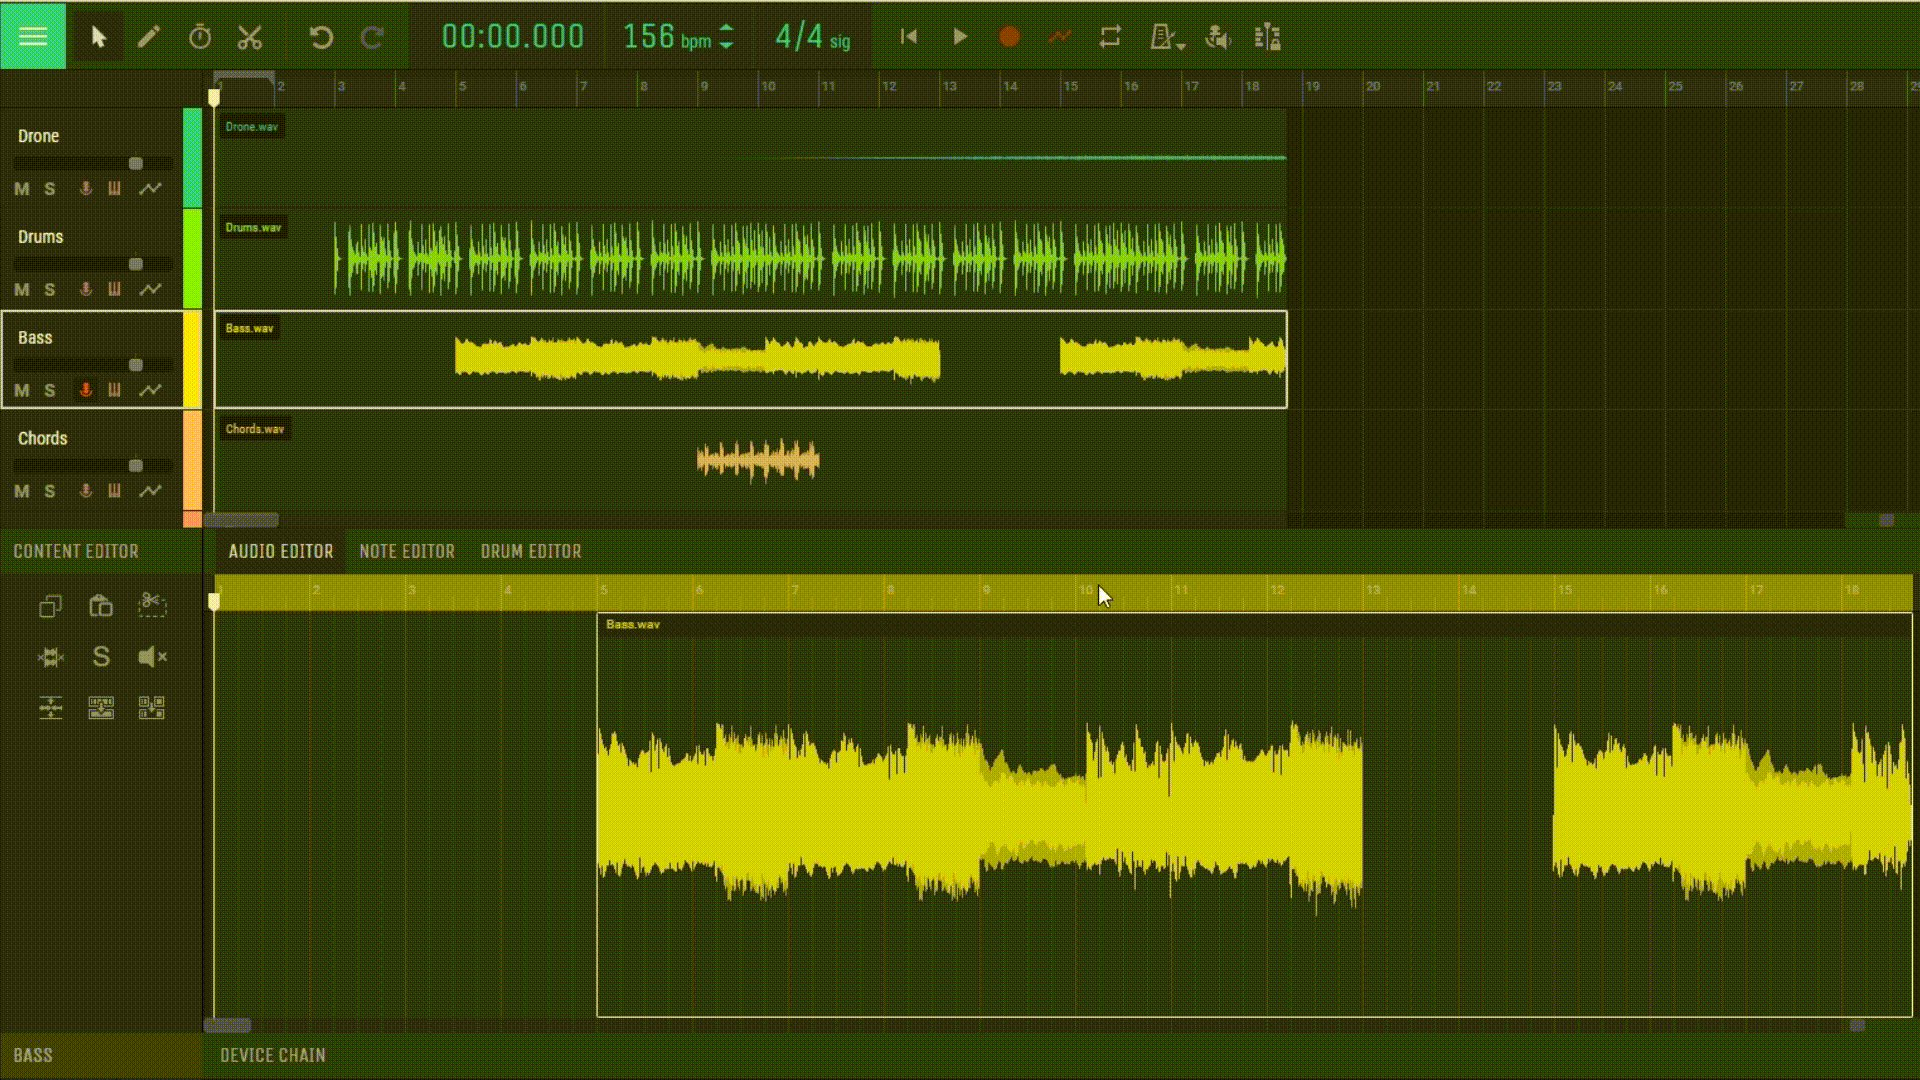 Using Audio Editor Tools